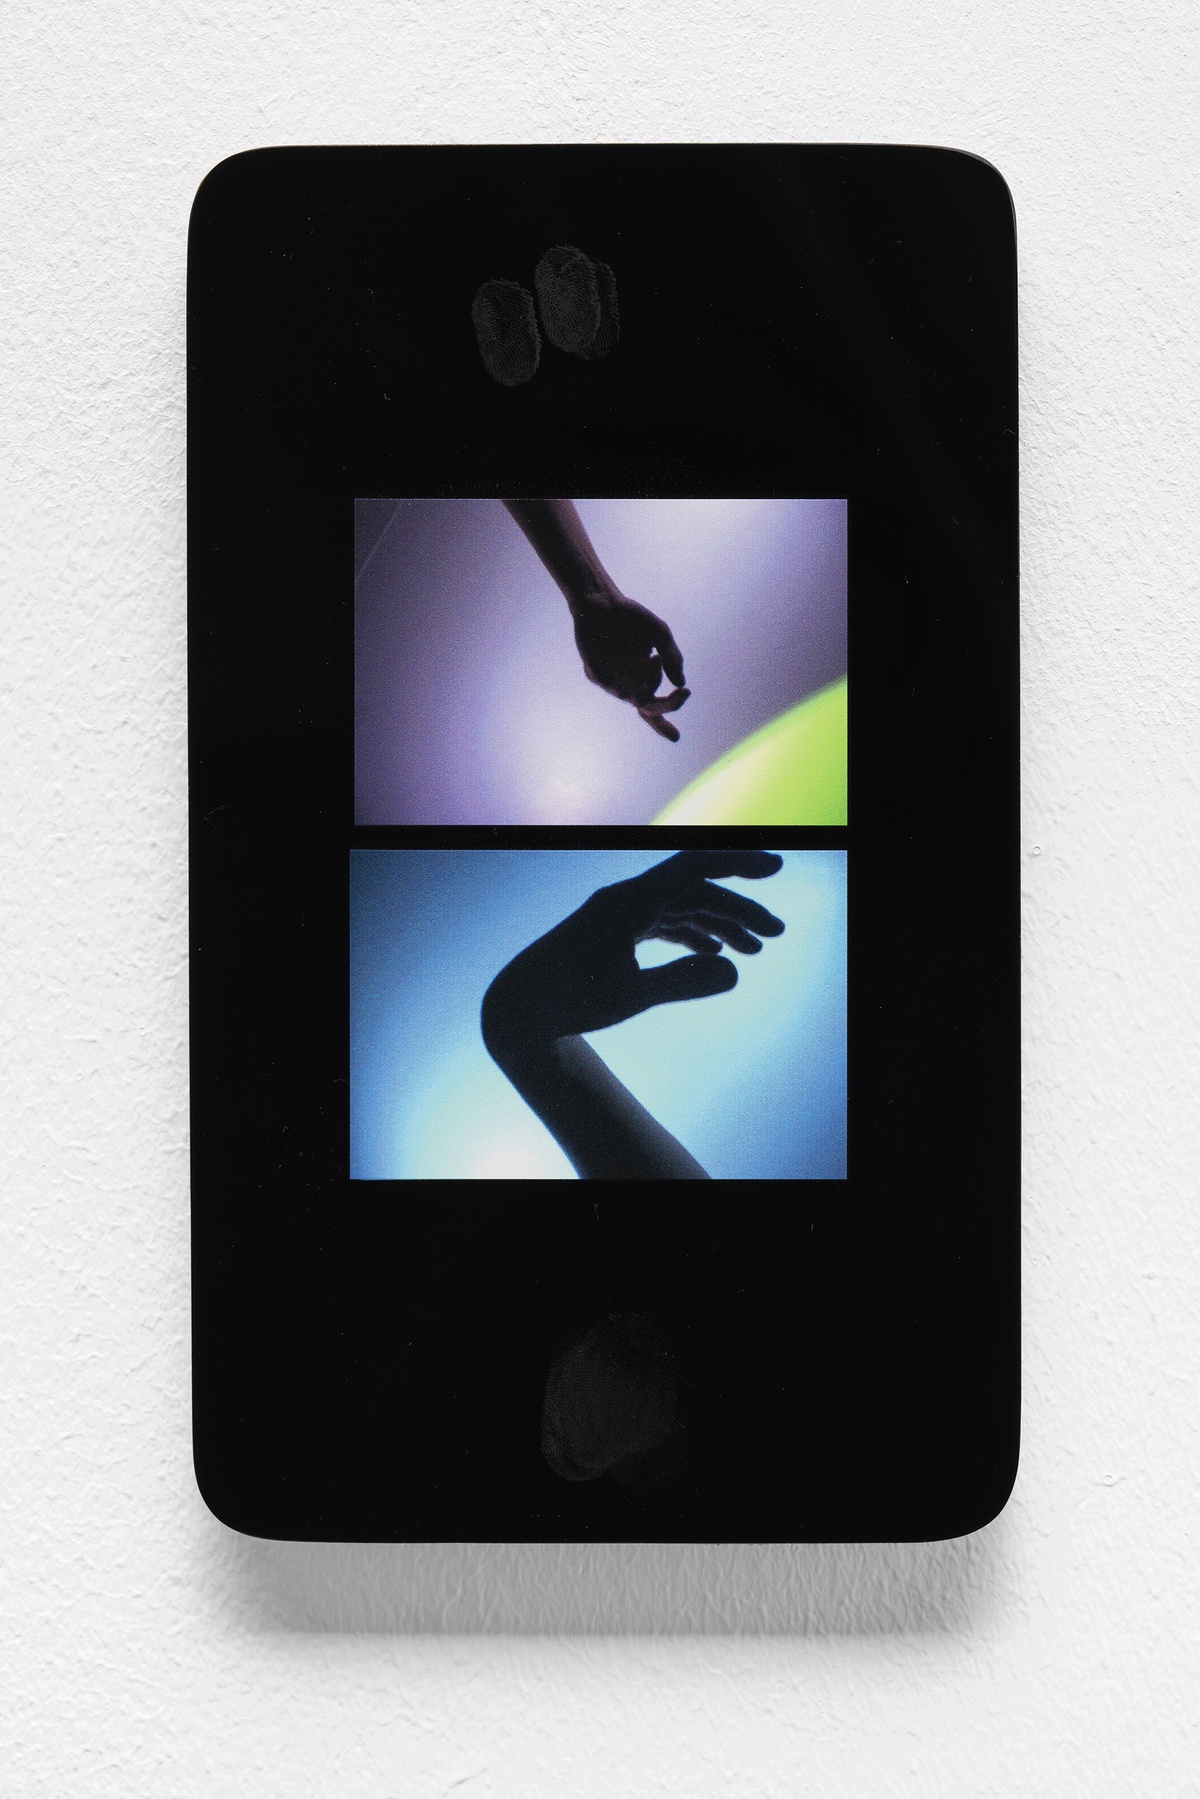 Jenna Bliss, Friendship #1plexiglass, UV print of iSight webcam photo, acrylic paint12.7 × 21.6 × 0.95 cm